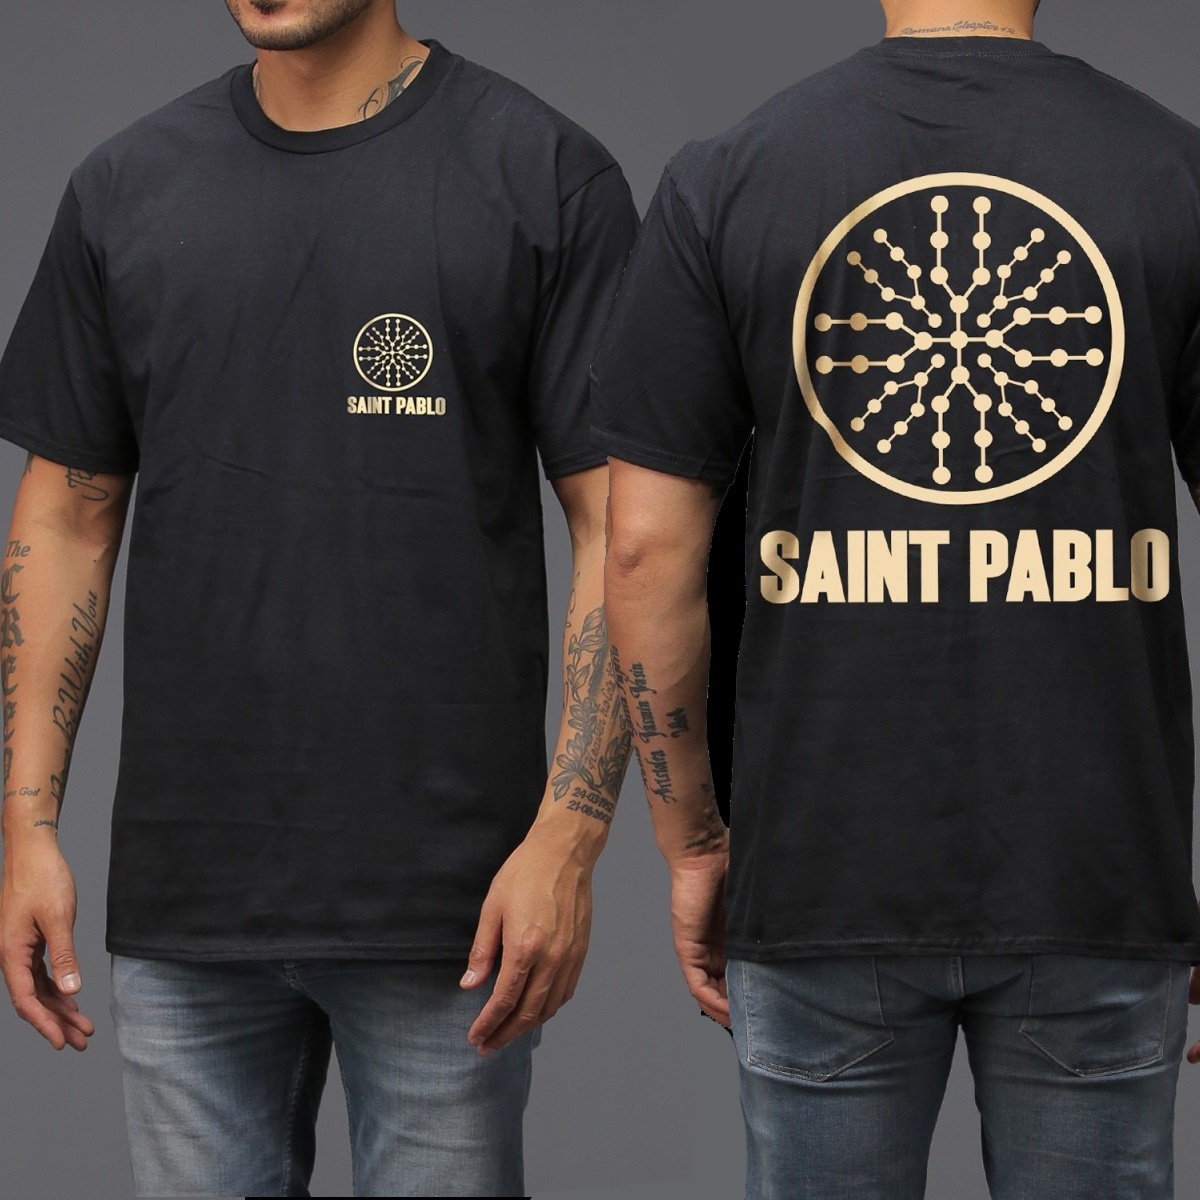 saint pablo clothing